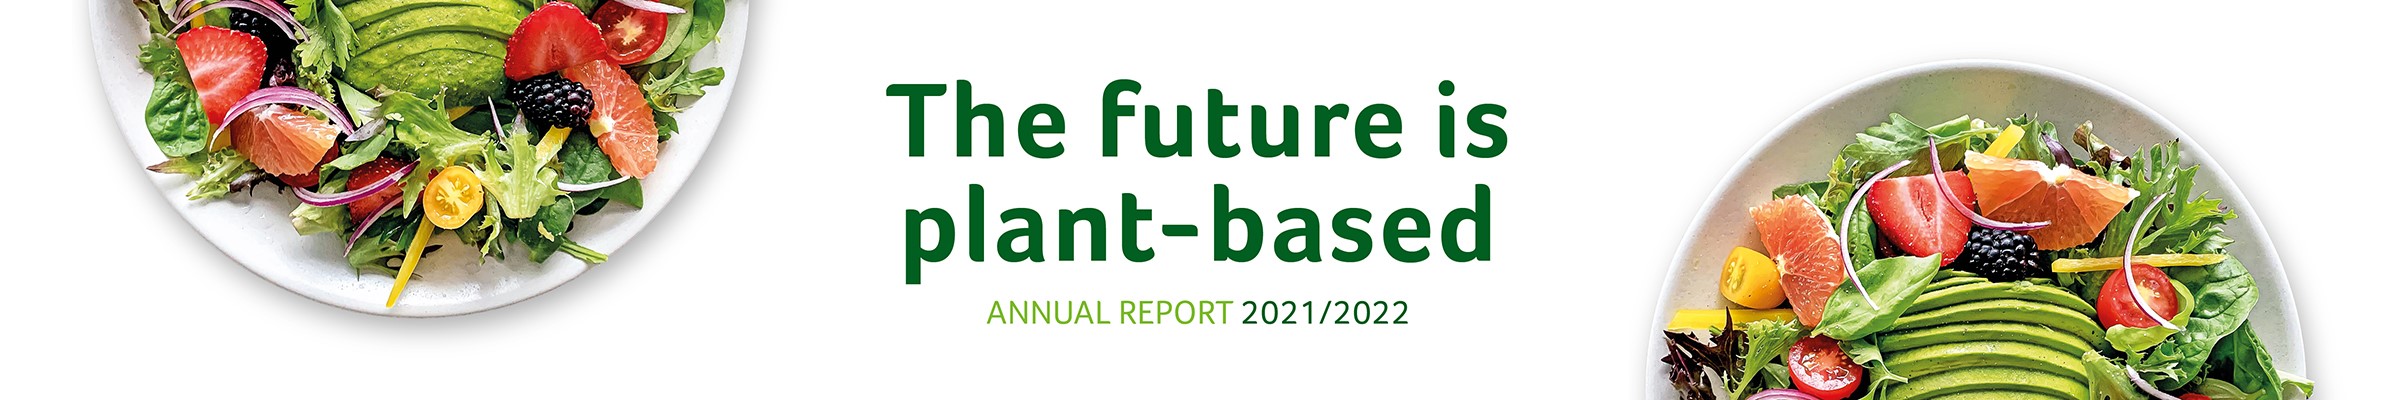 Greenyard_Annual_Report_2021-2022_banner_website